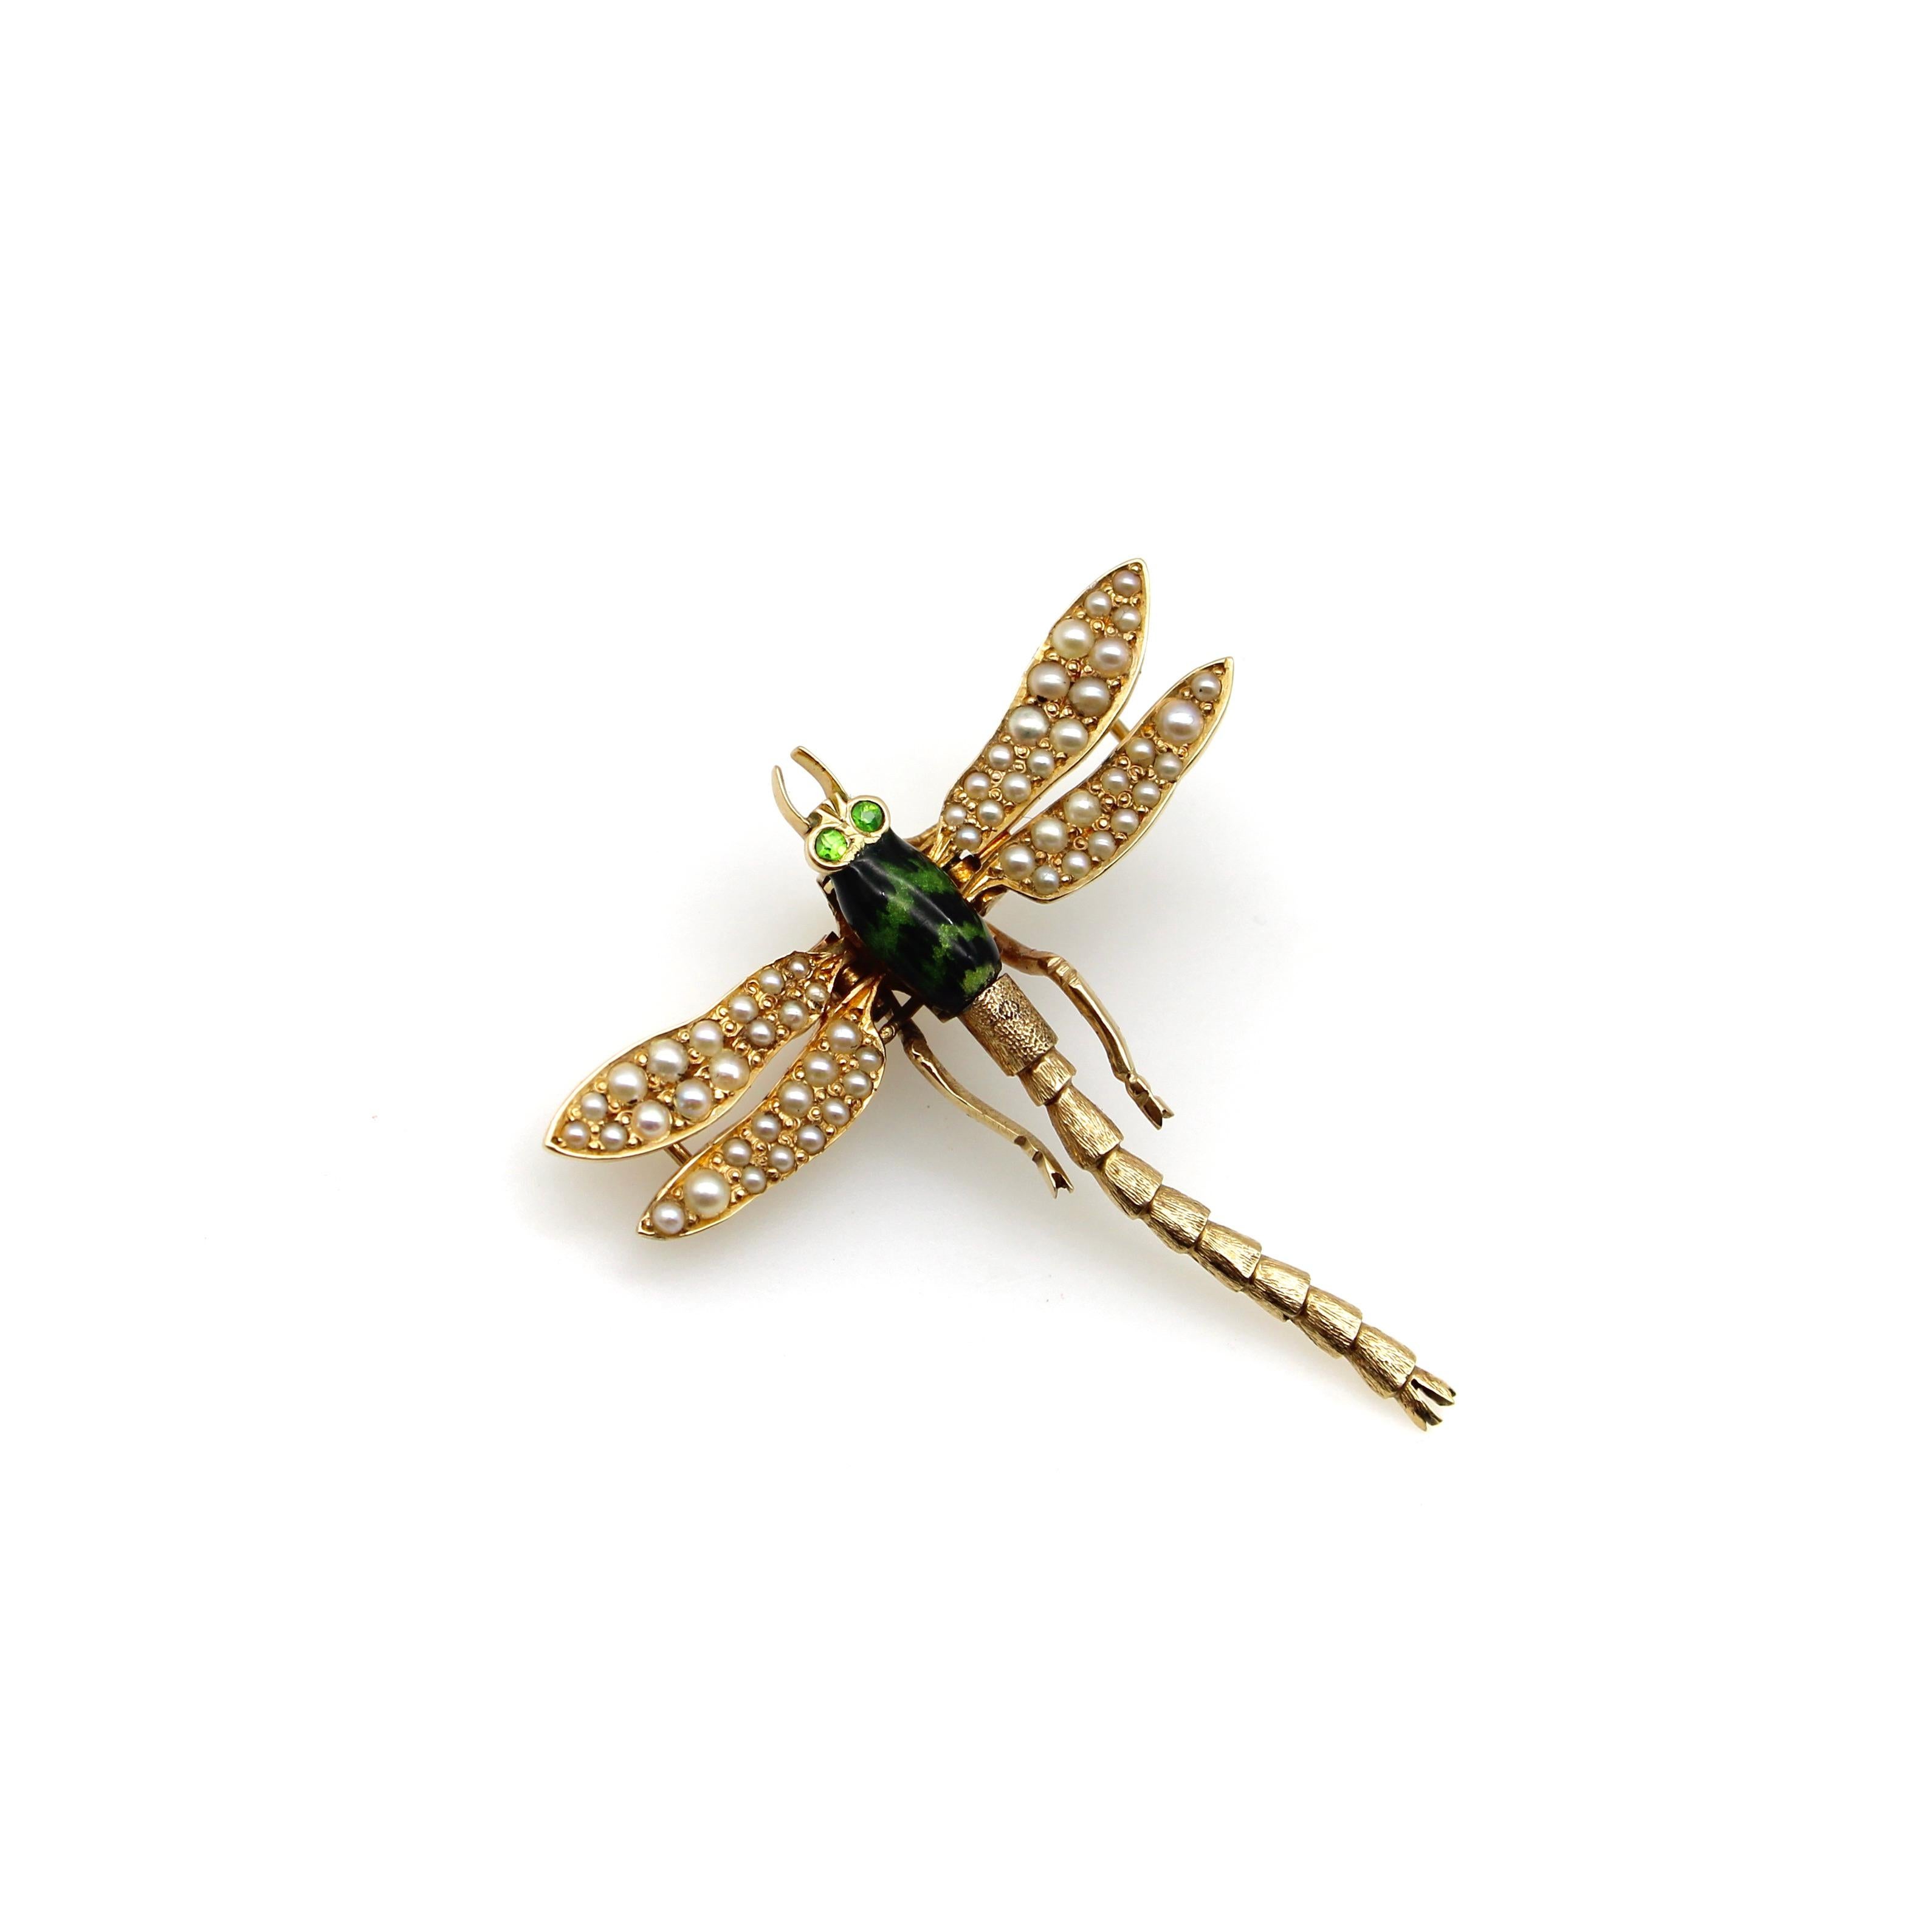 Edwardian 14K Gold Dragonfly Pendant with Demantoid Garnet & Pearls 1